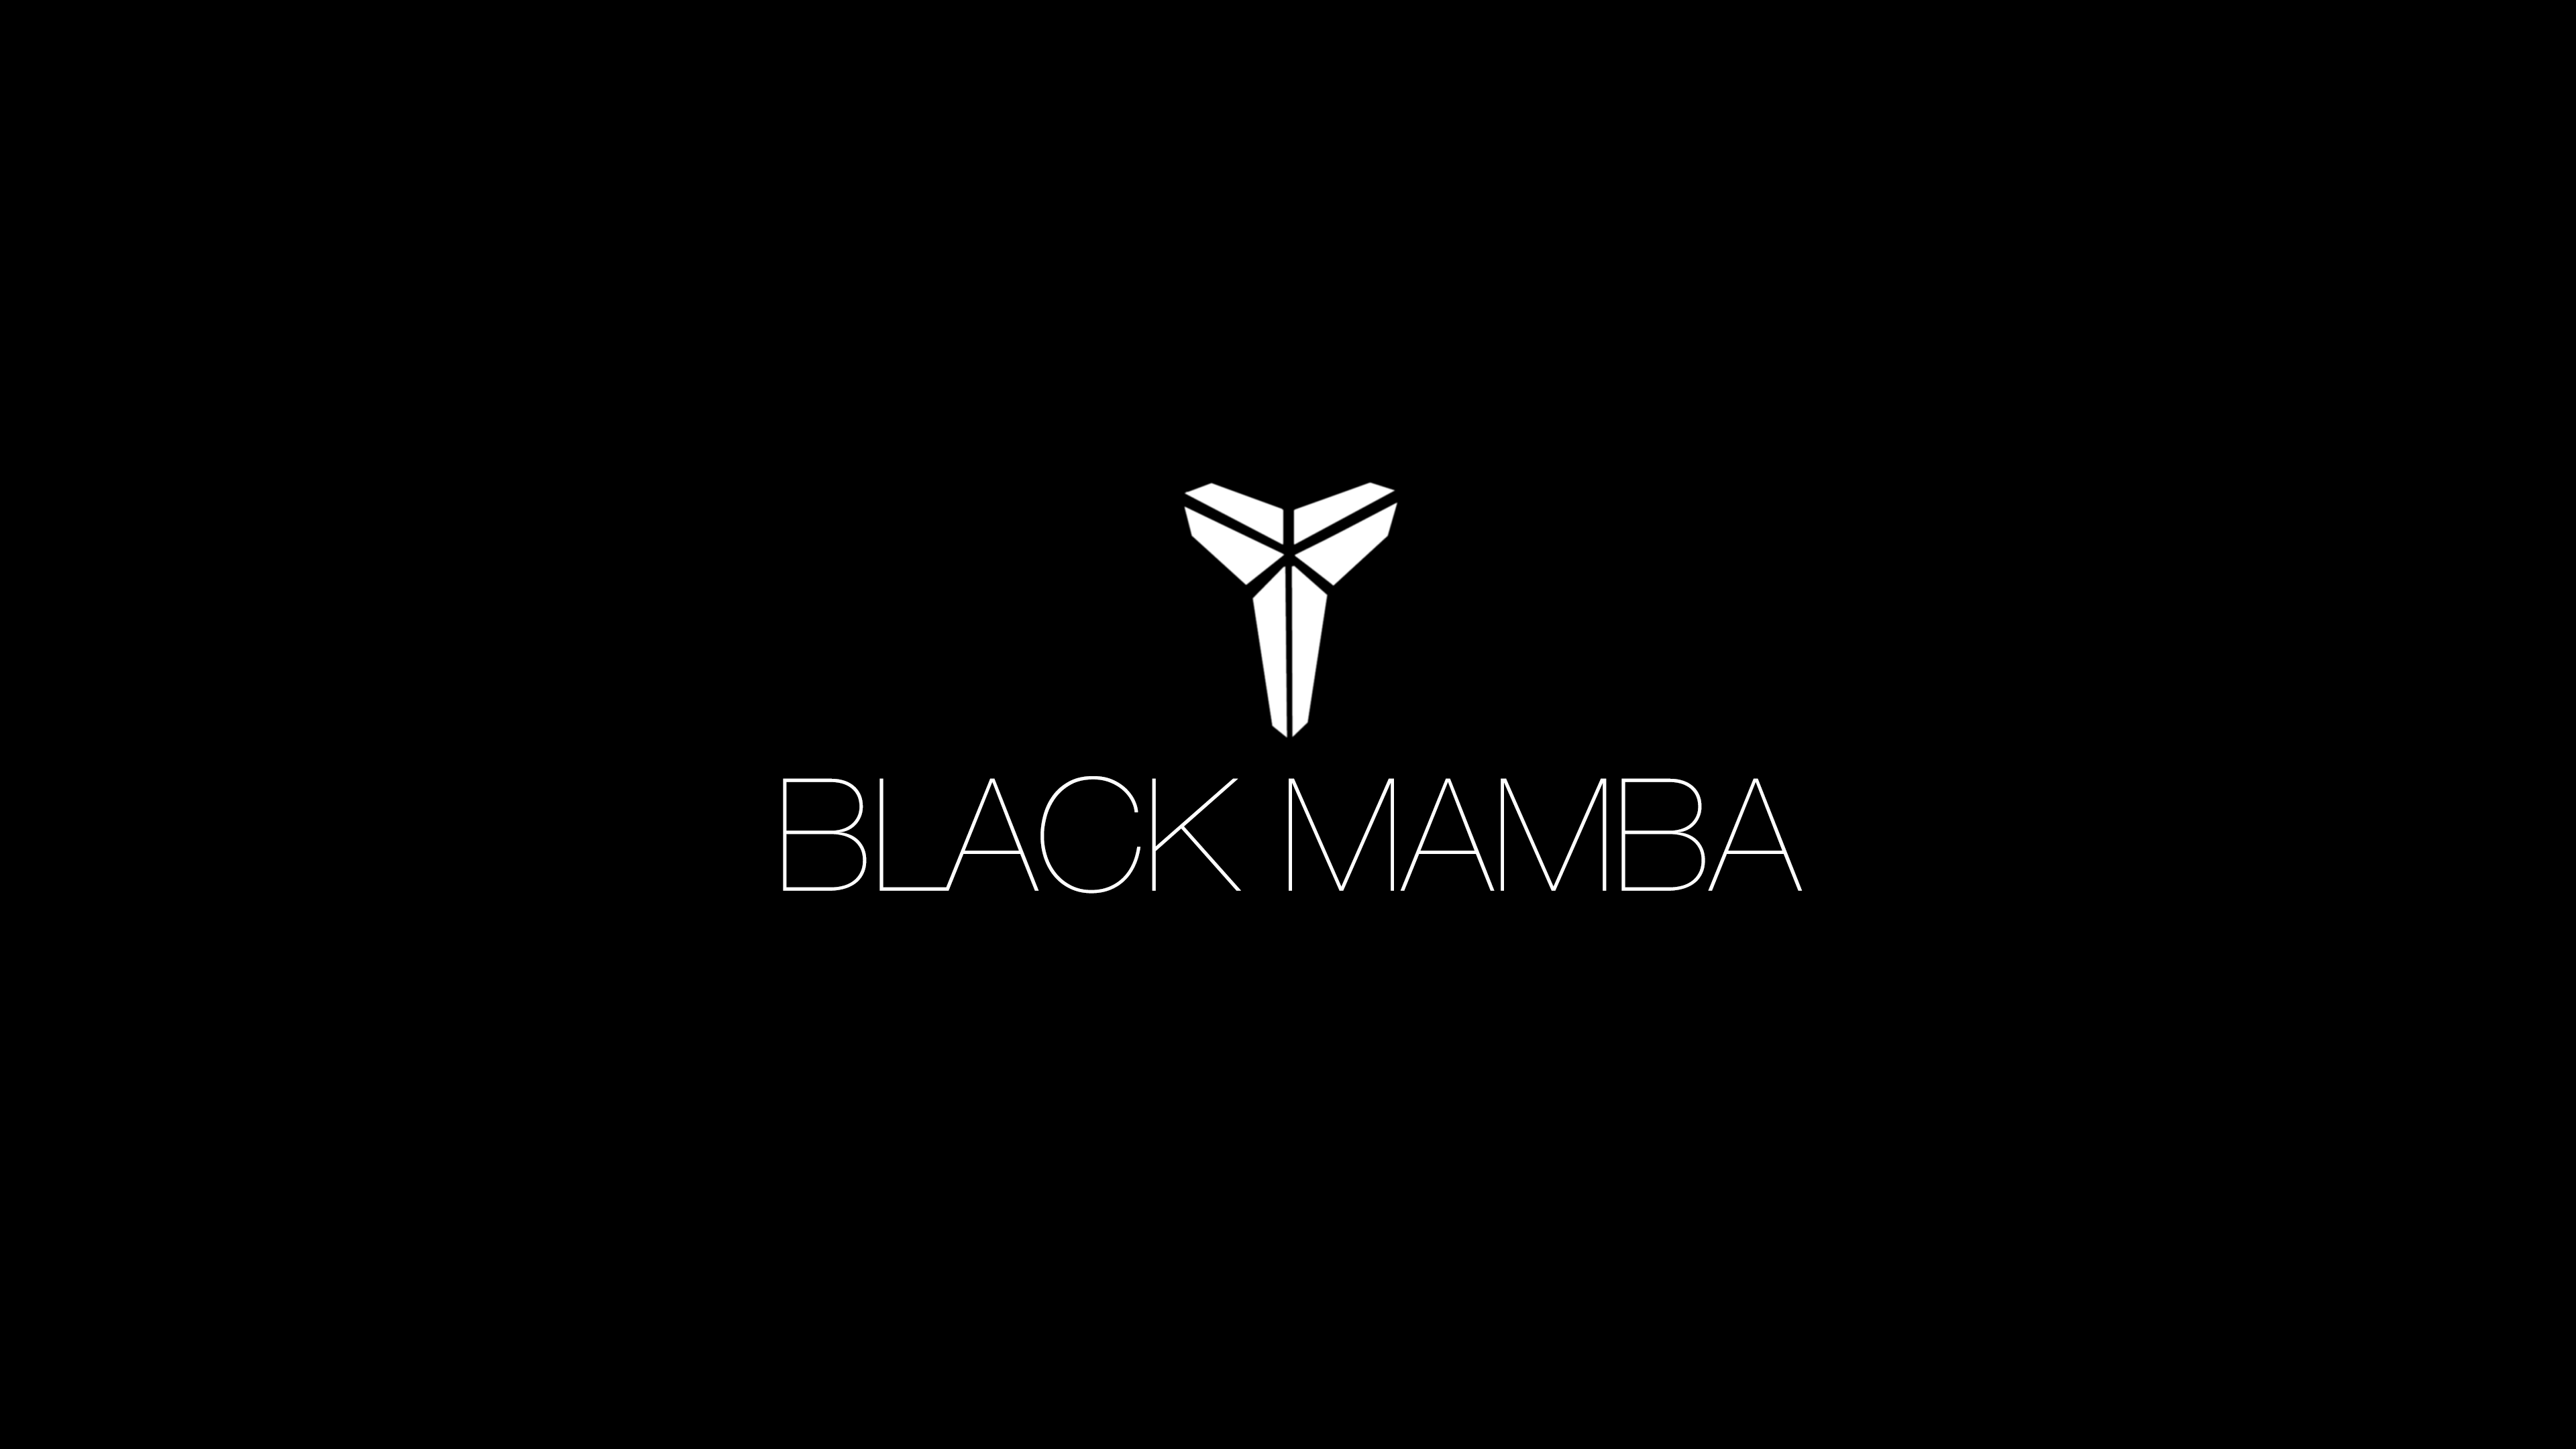 Black Mamba Logo Kobe Bryant wallpaper HD 2016 in Basketball